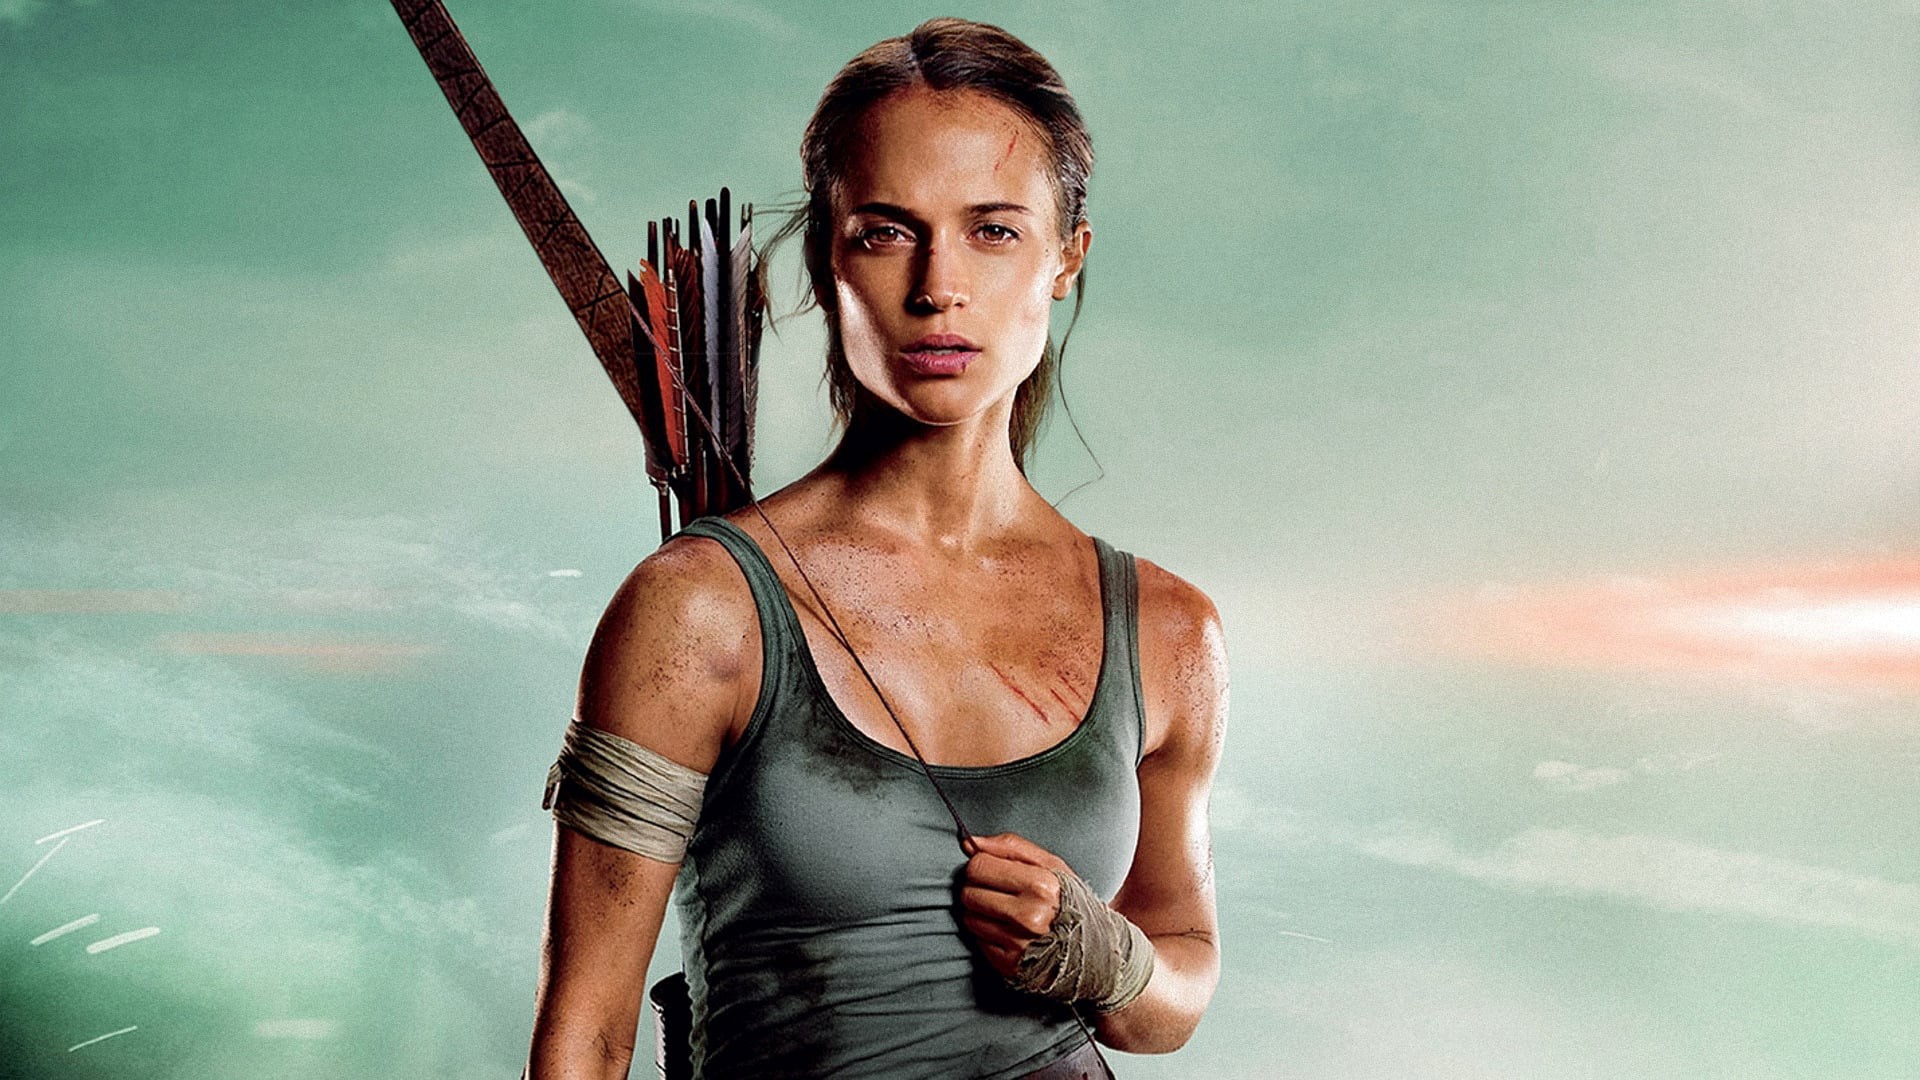 Netflix confirma anime de Tomb Raider